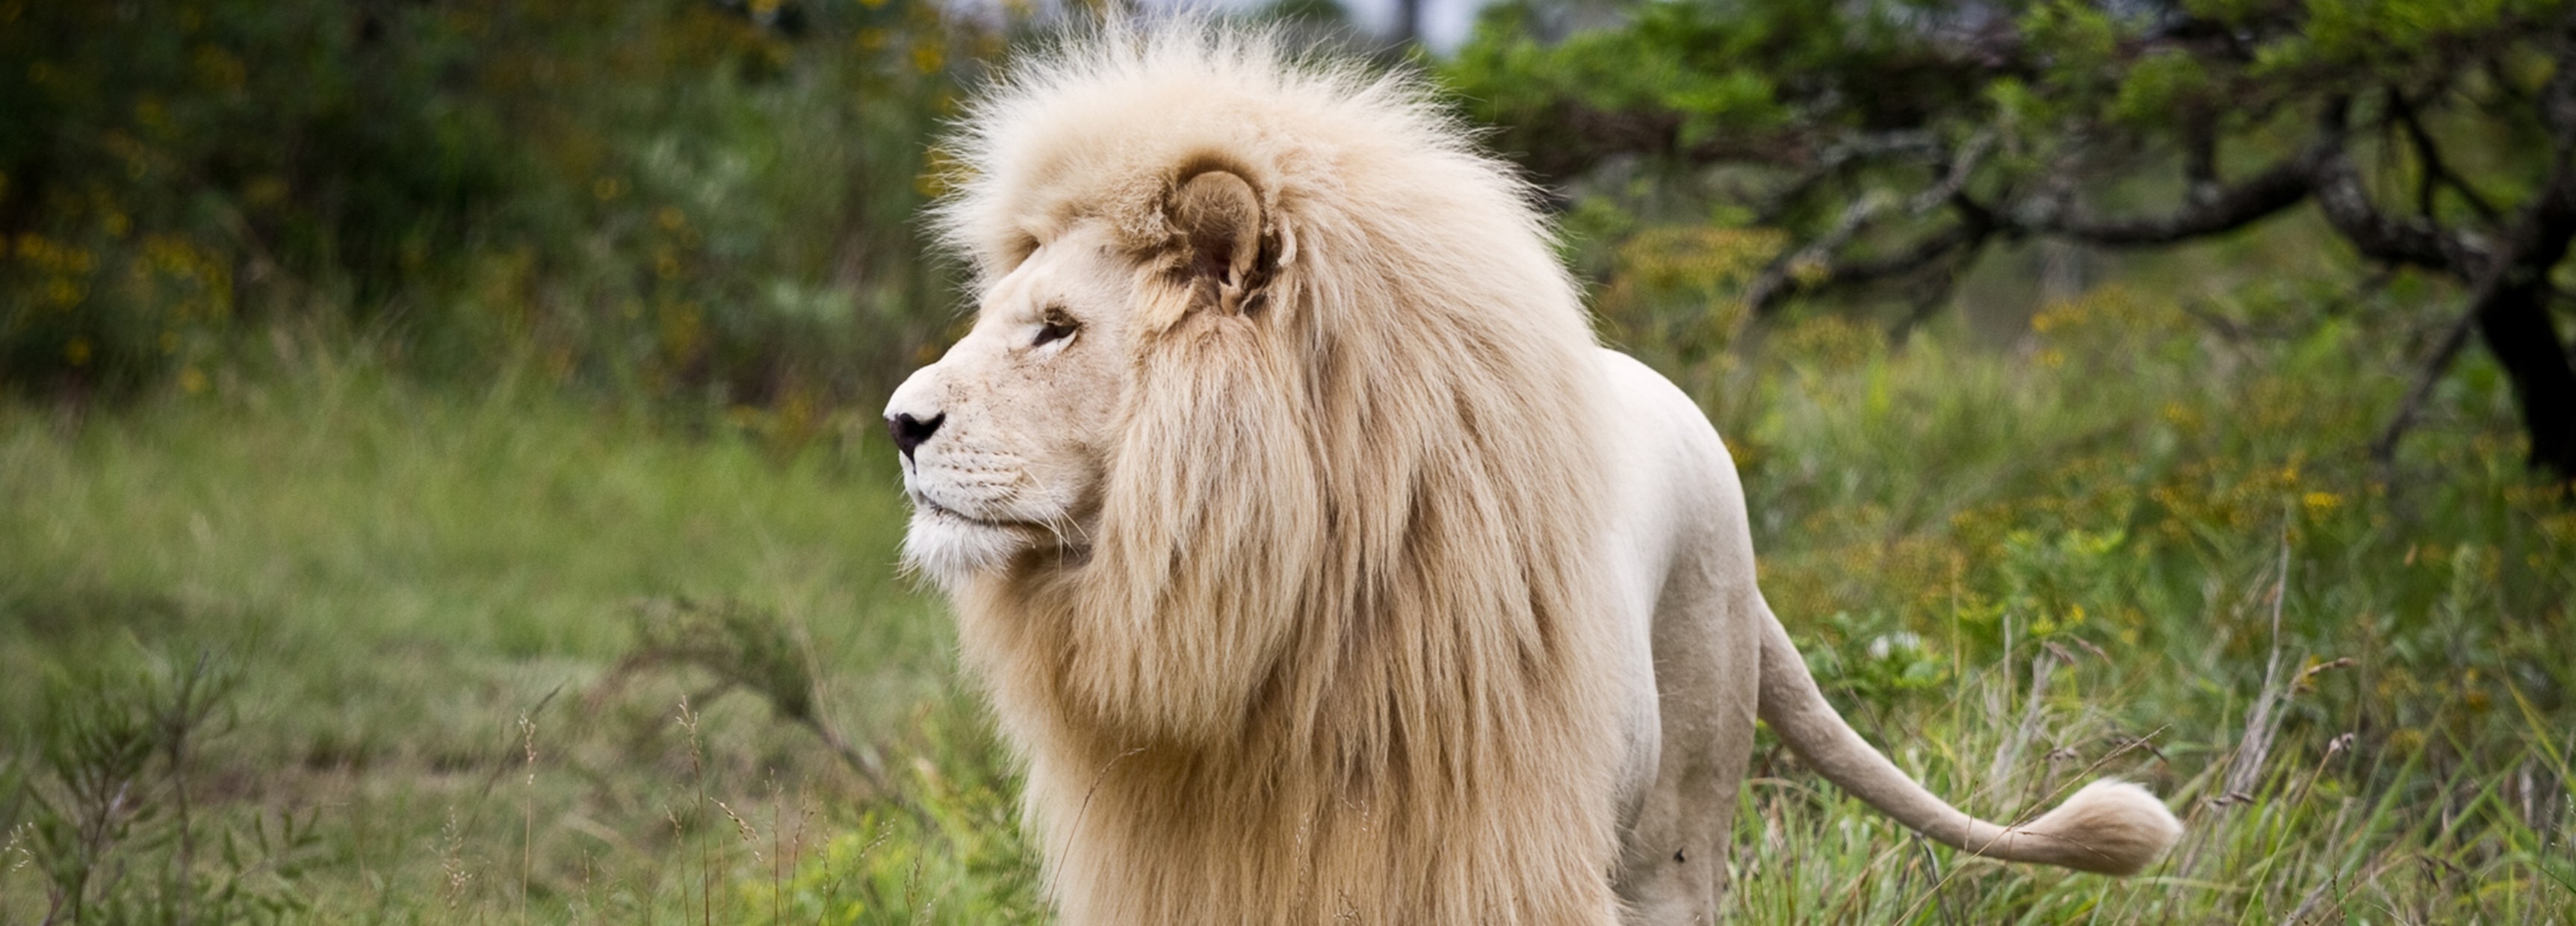 LION, THE KING OF THE JUNGLE (NAMIBIA), Safari World Tours